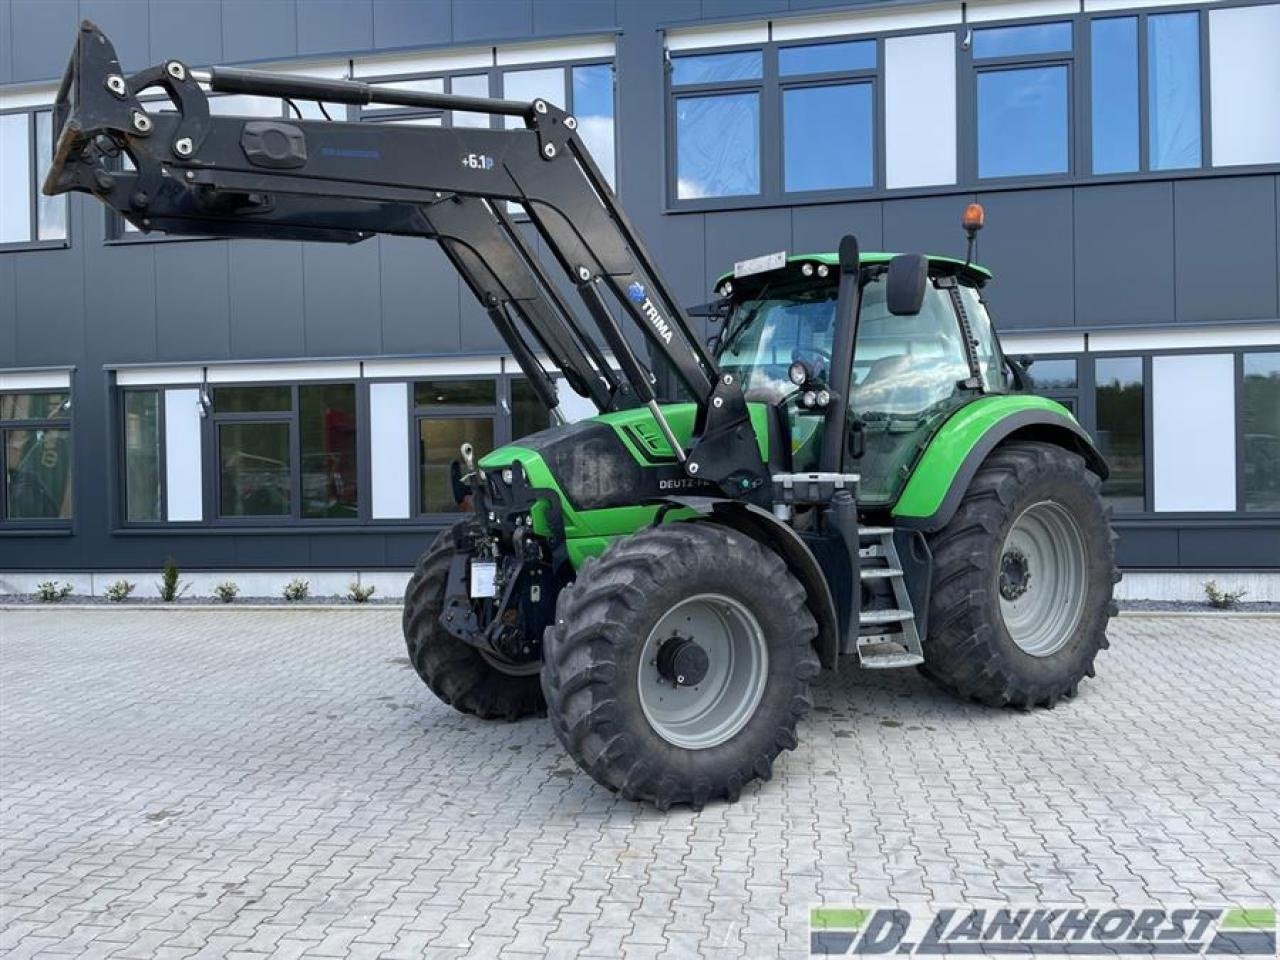 Deutz-Fahr 6180 TTV tractor 58 500 €